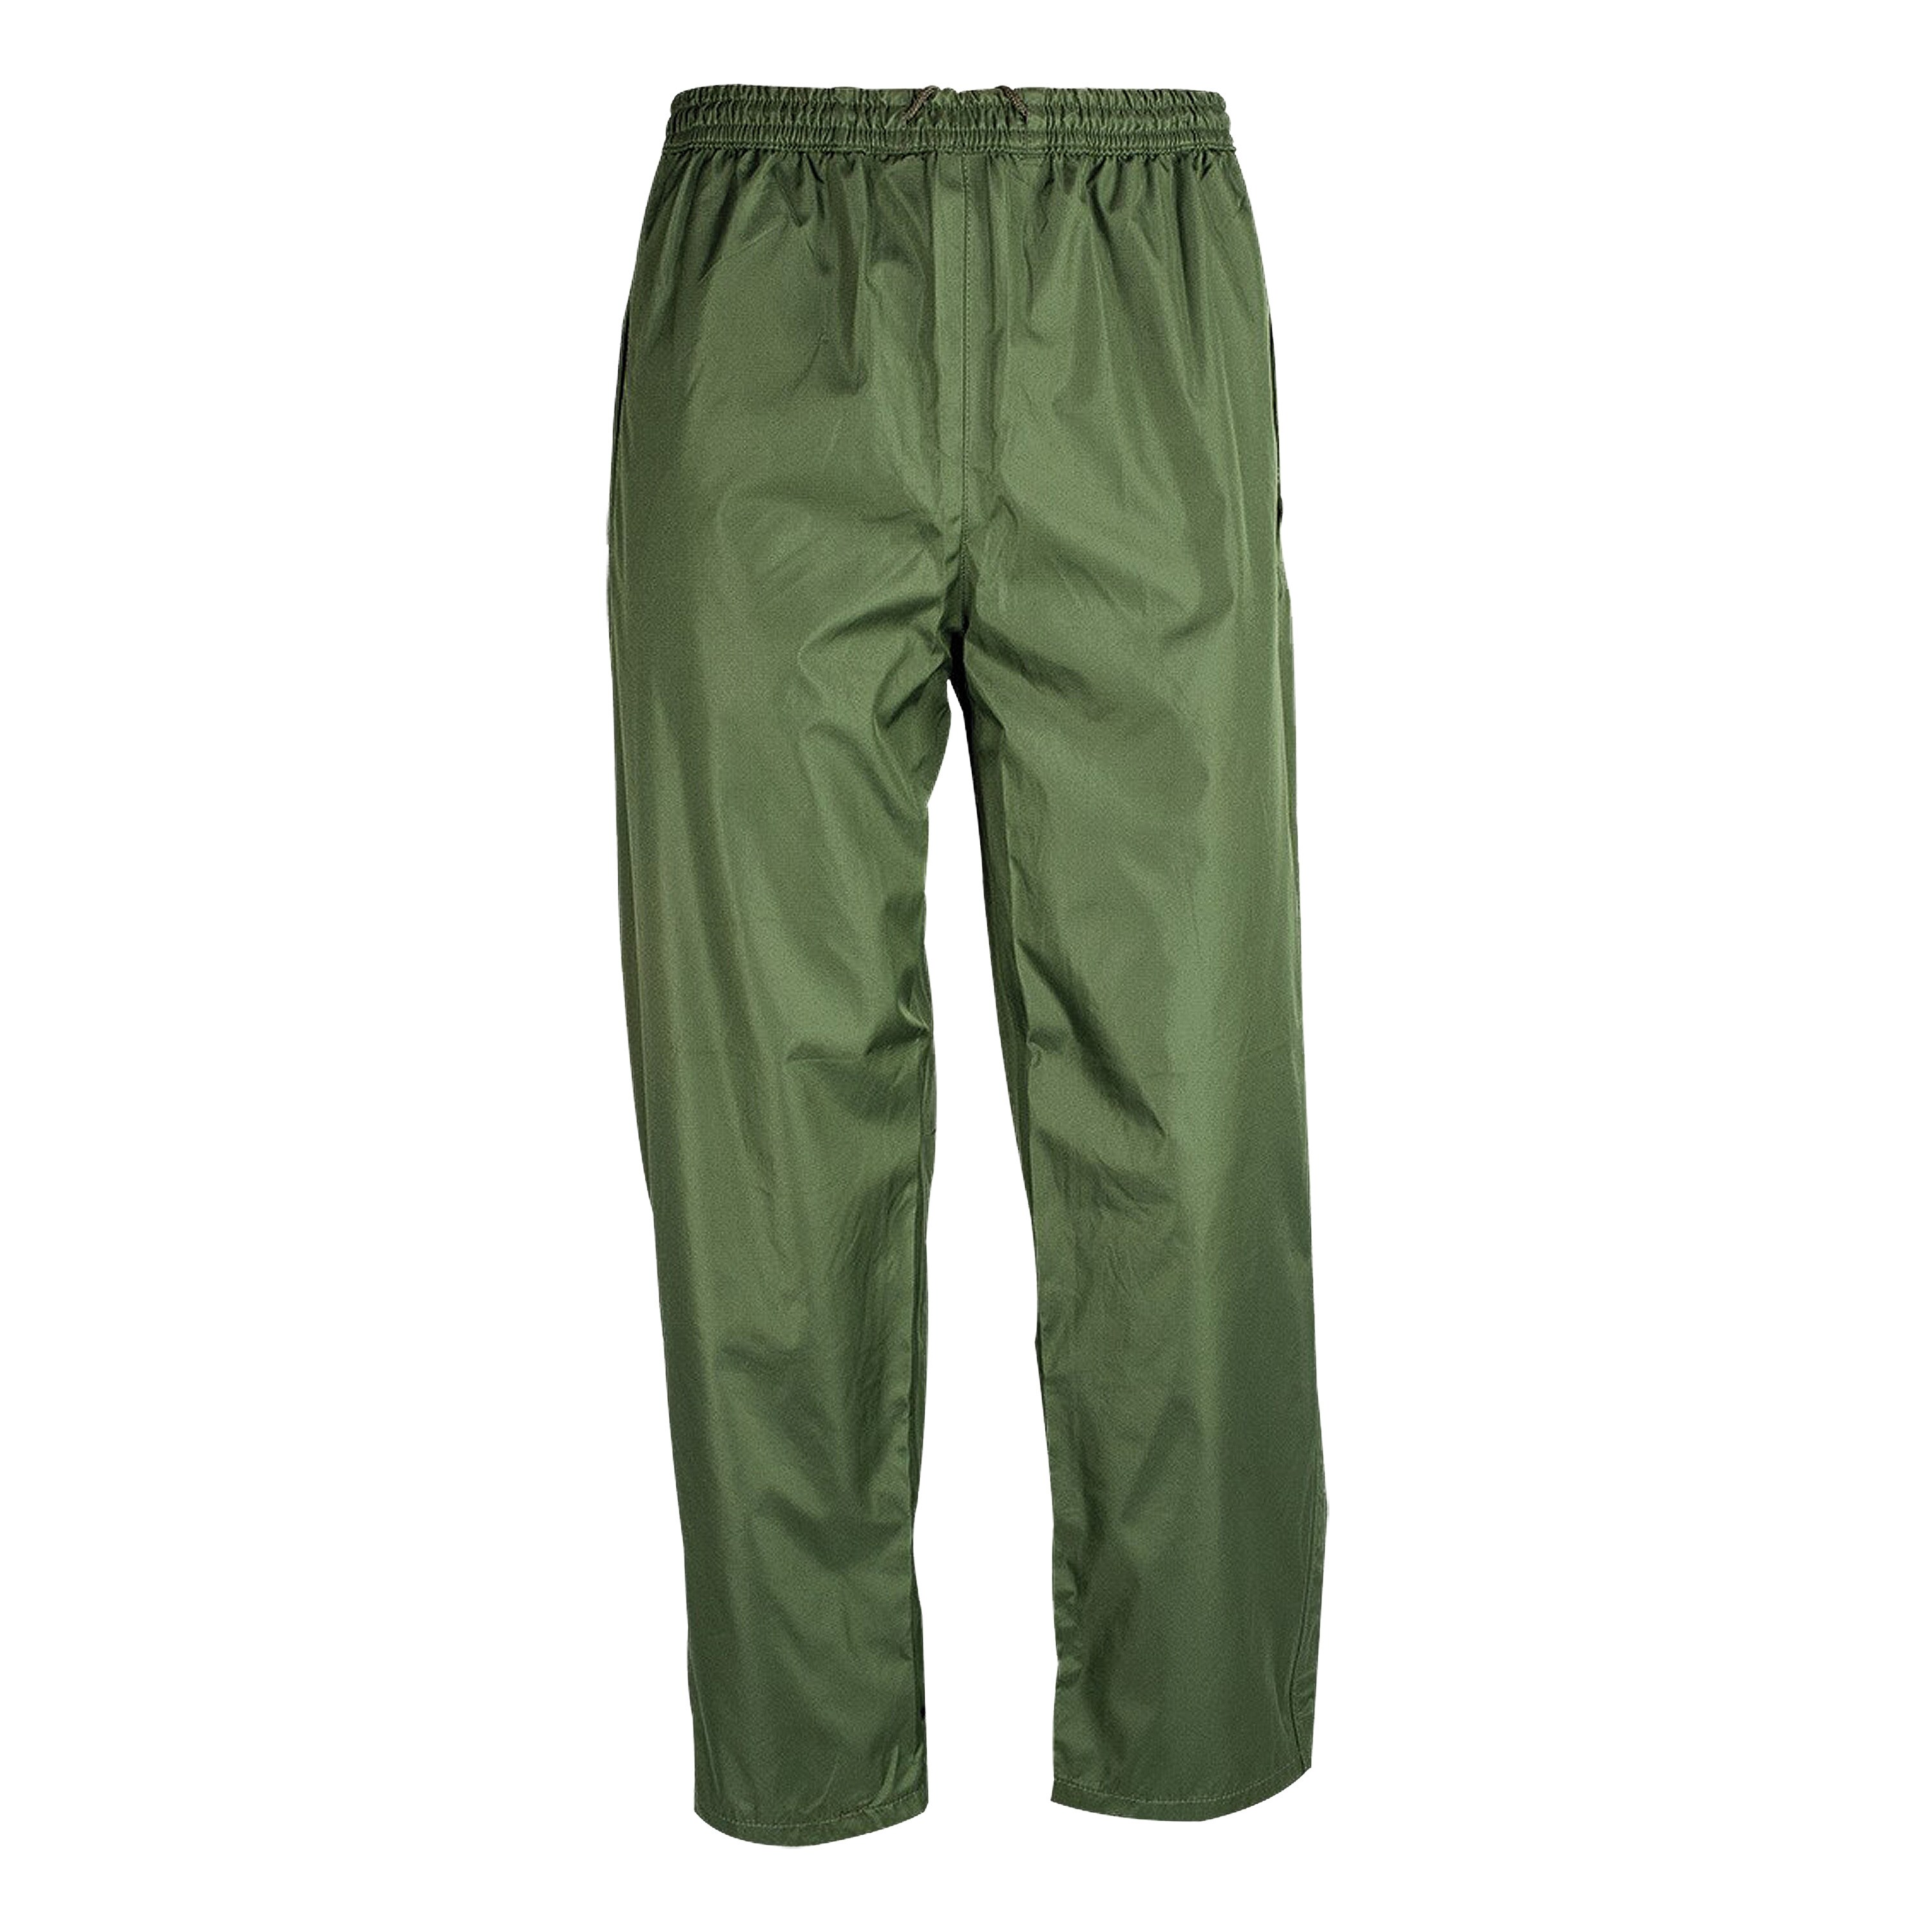 Pantaloni Impermeabili S HIGHLANDER Stormguard Verde Verde Oliva